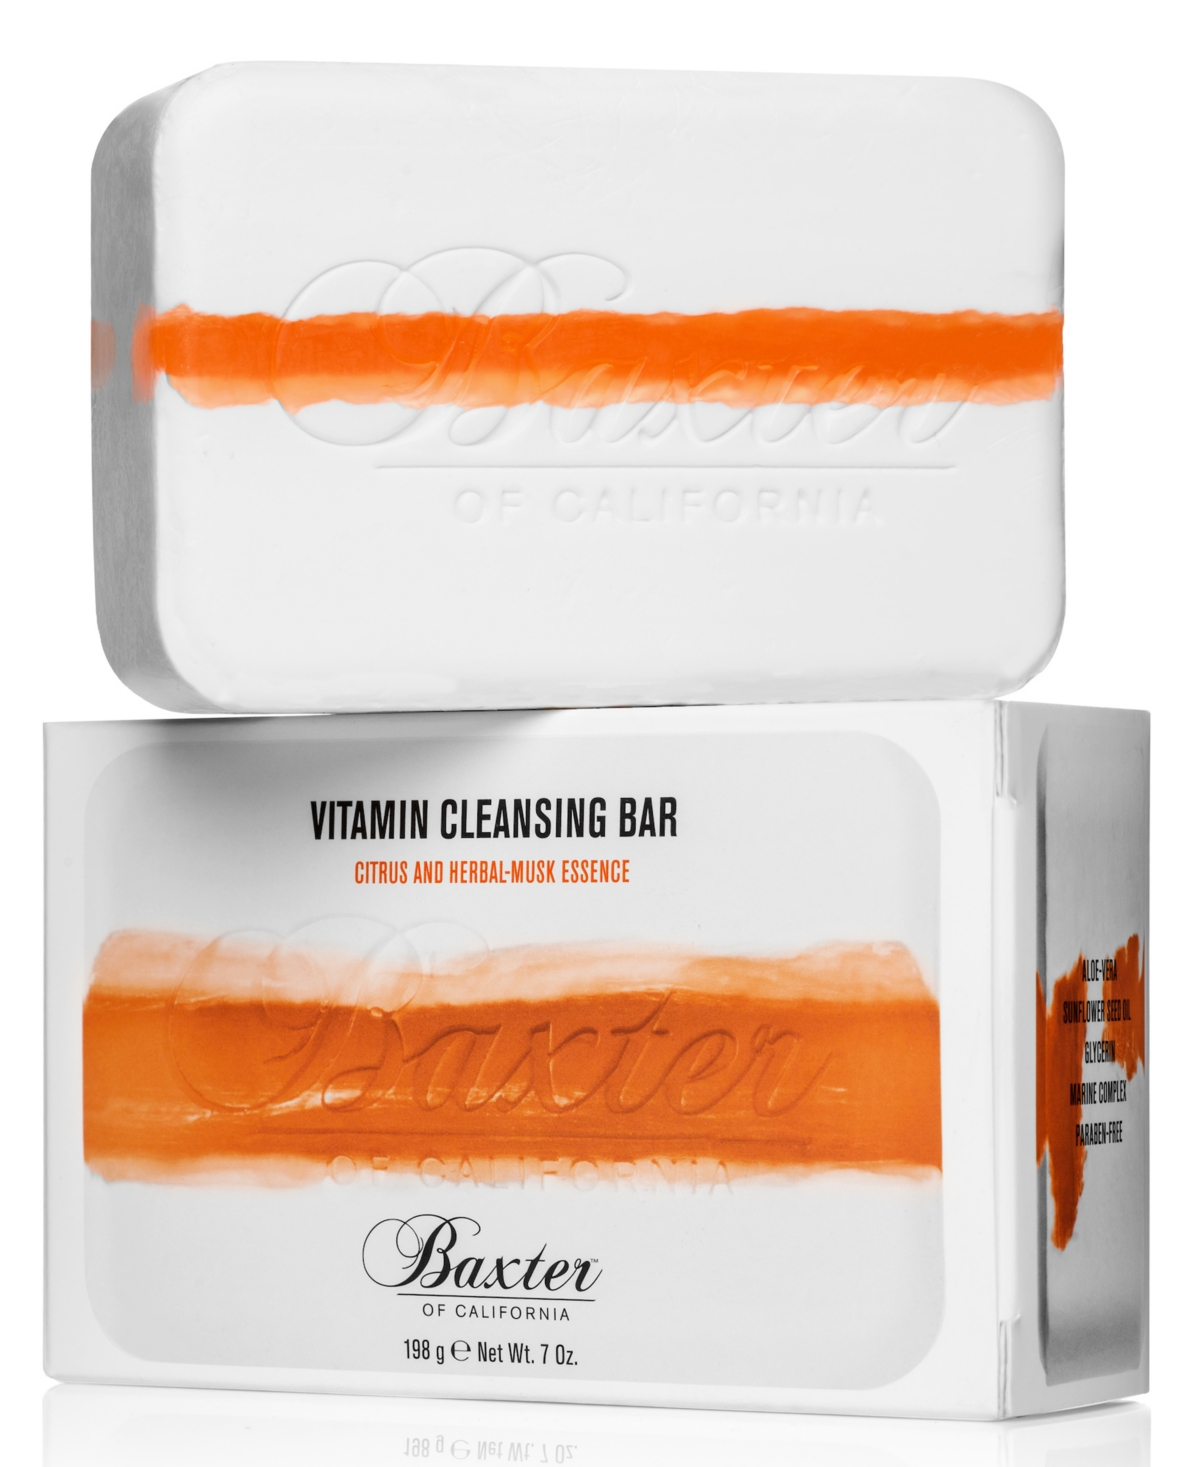 Baxter Of California Vitamin Cleansing Bar - Citrus & Herbal-Musk Essence, 7-oz.